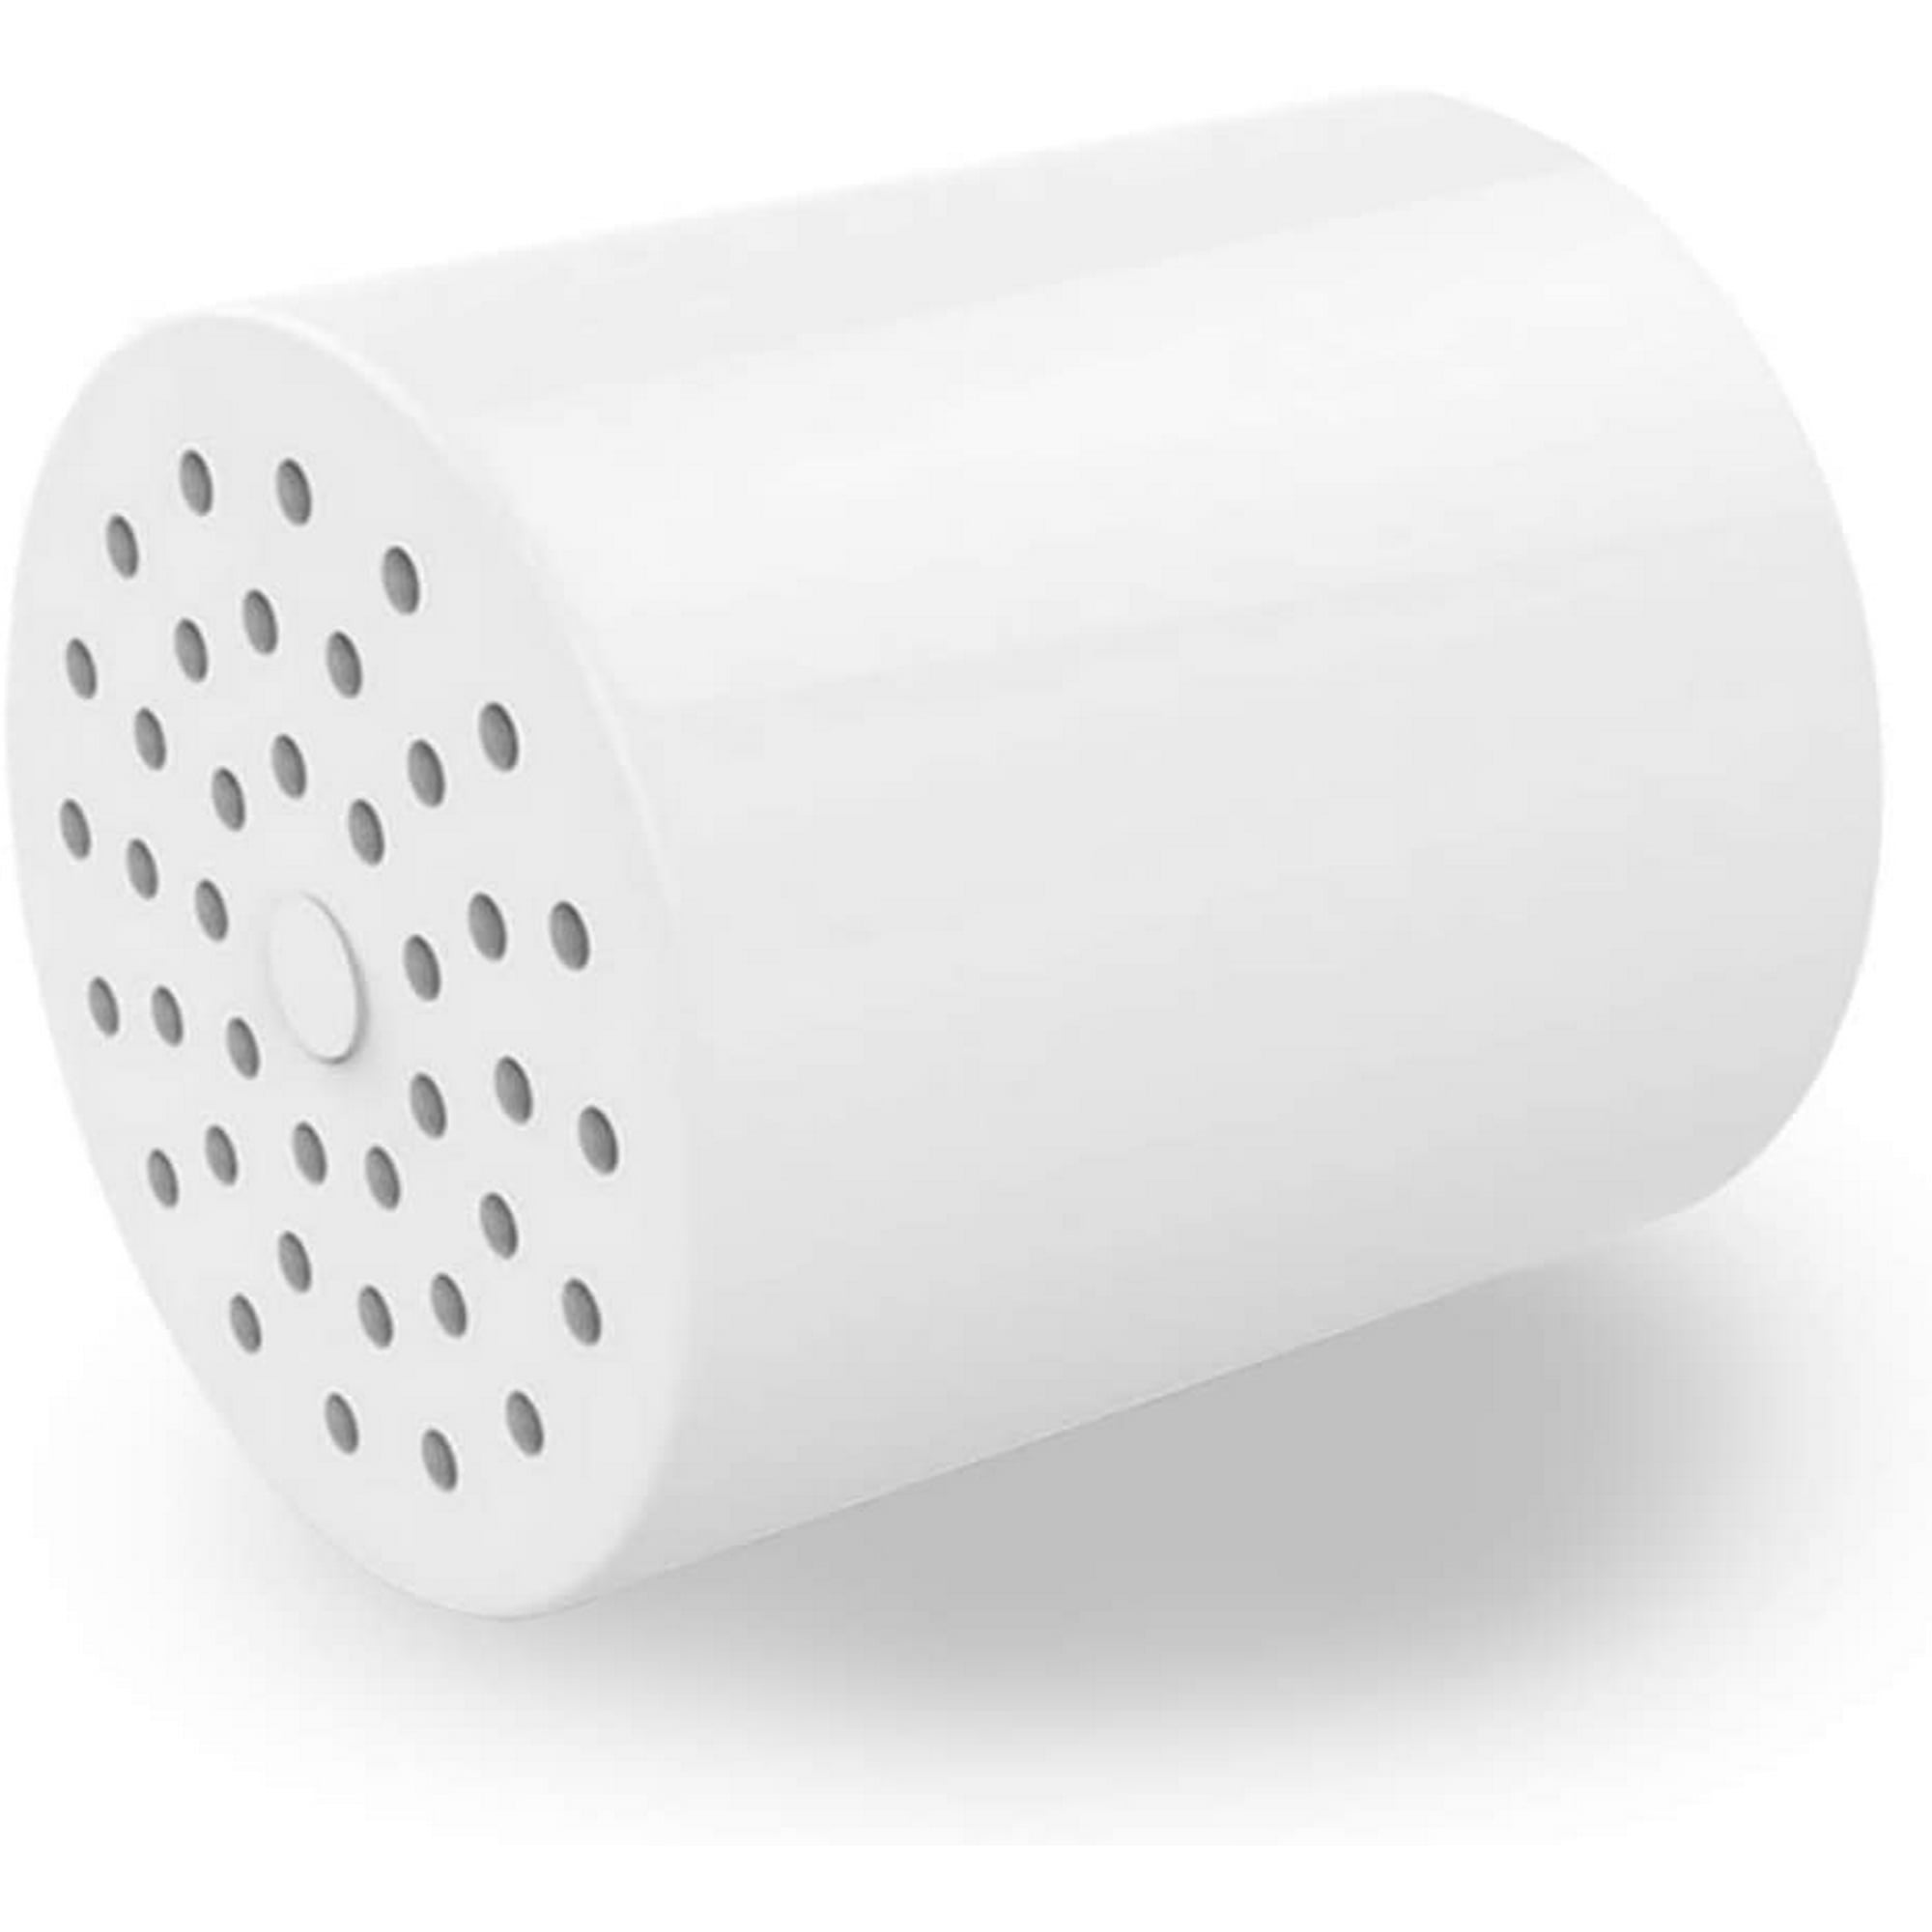 Shower Head Filter Water Softener for Hard Water Chlorine Purifier Universal 